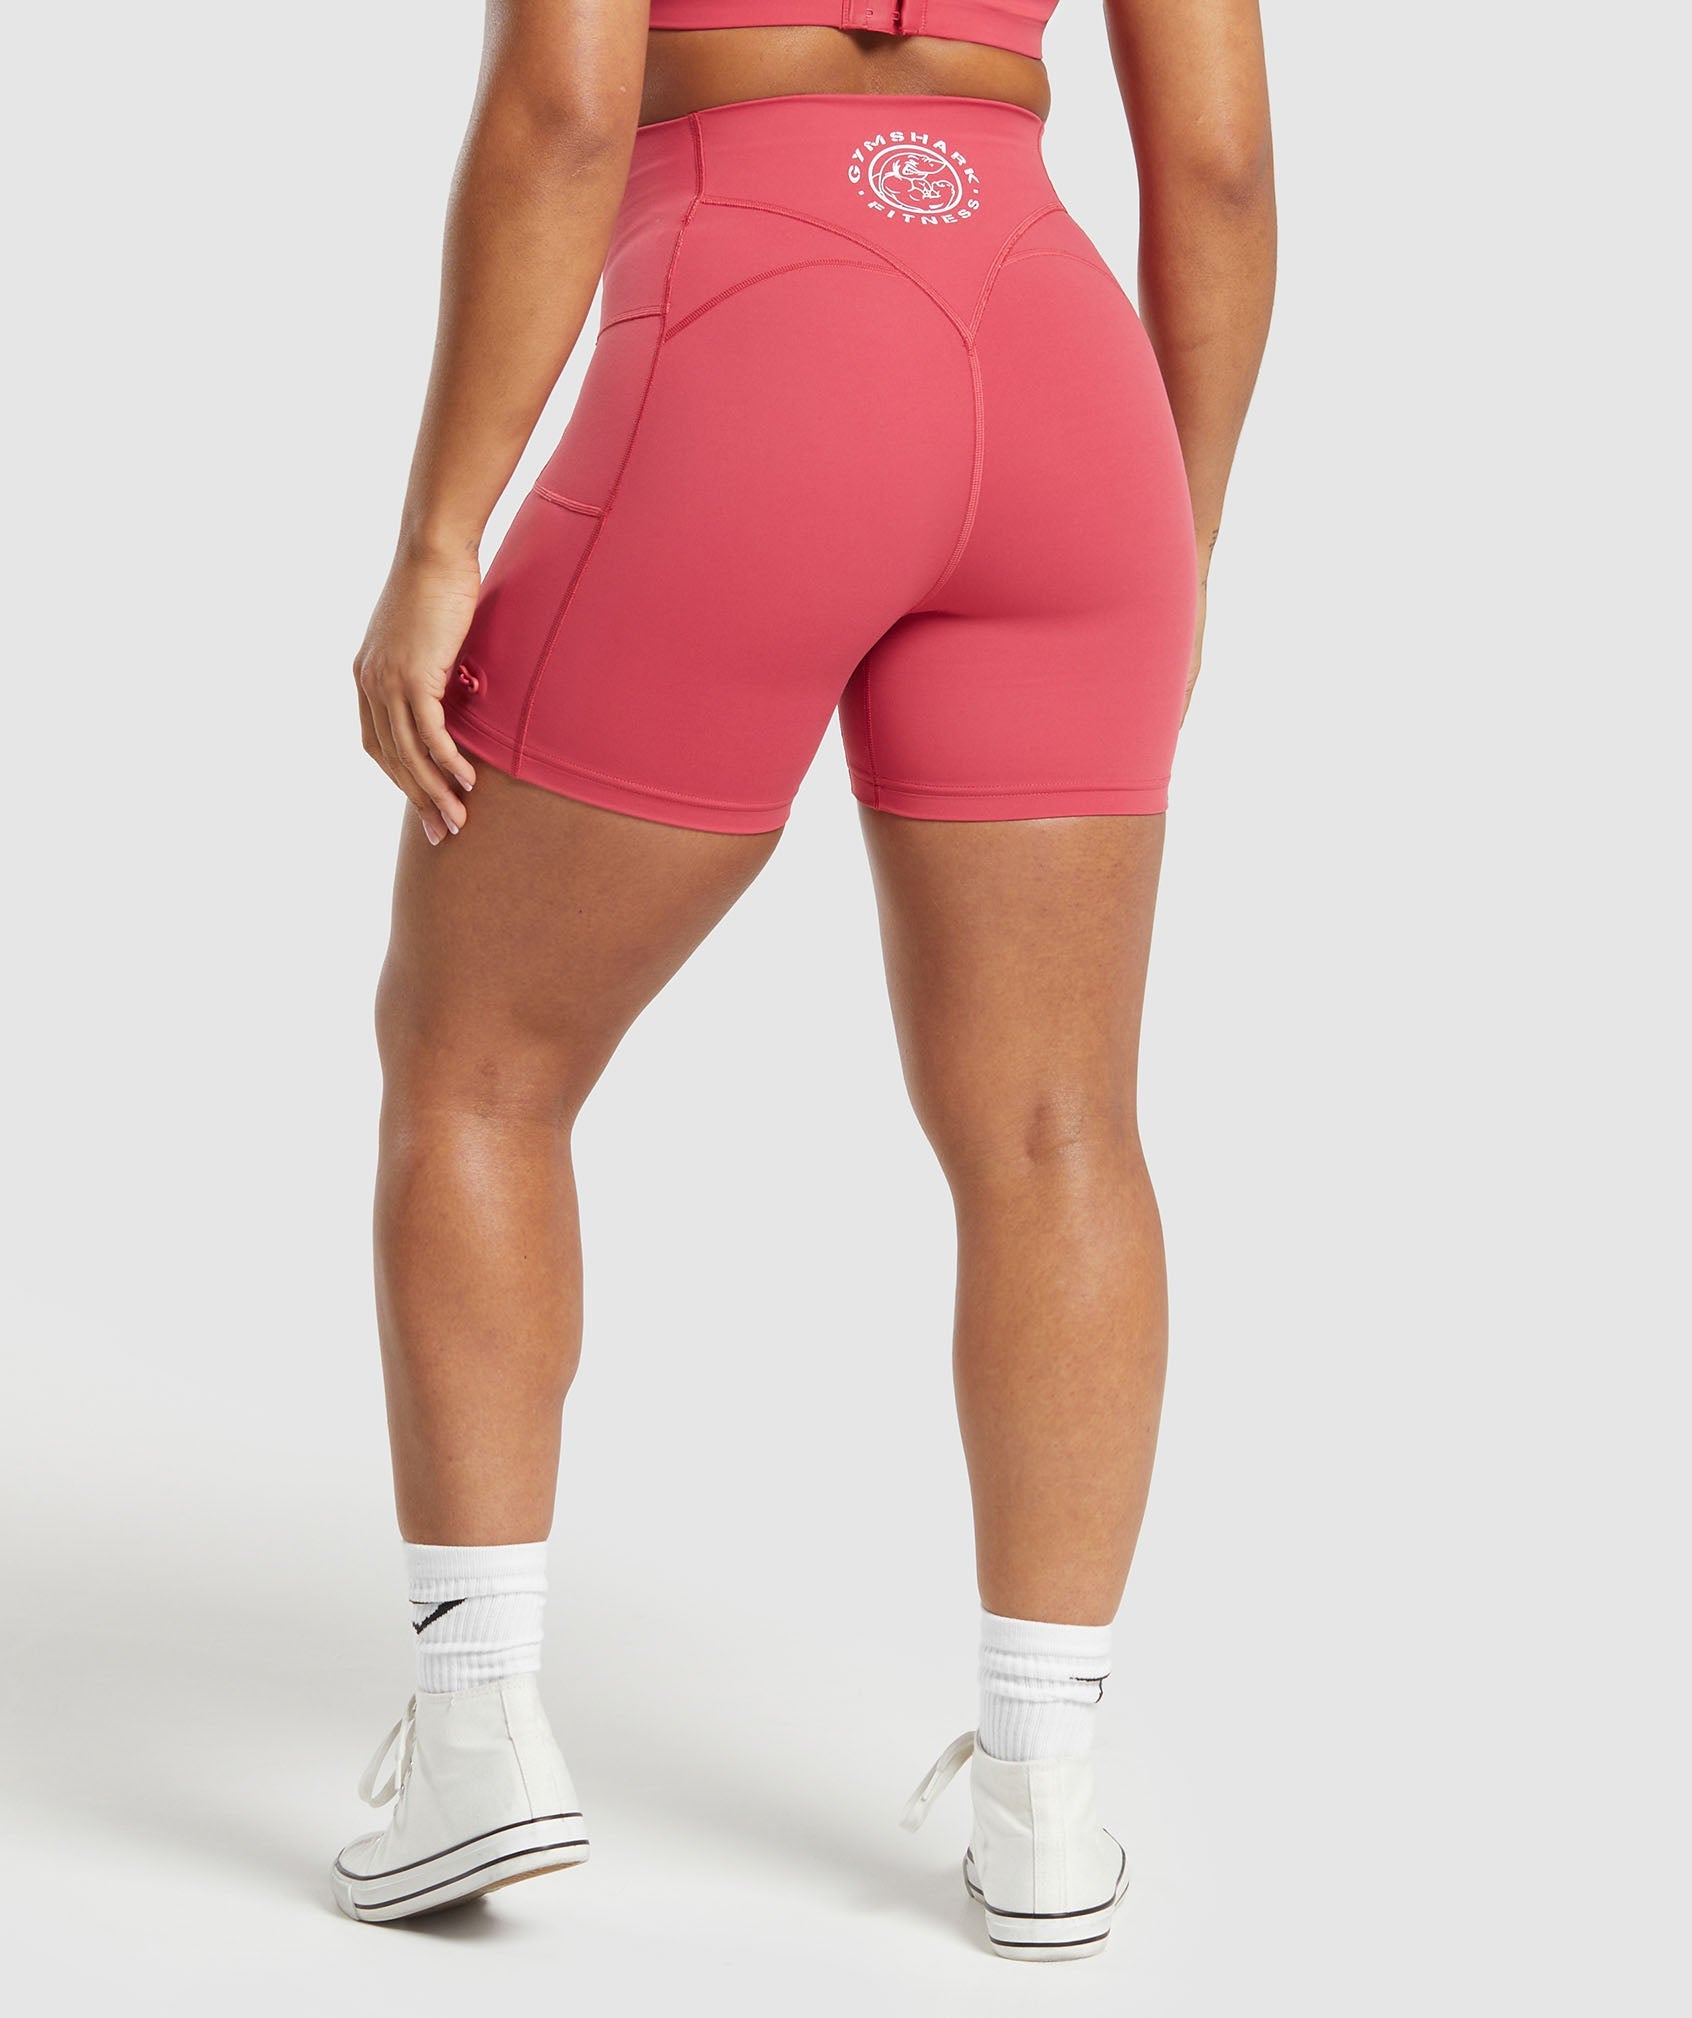 Women's Booty Shorts - Gymshark